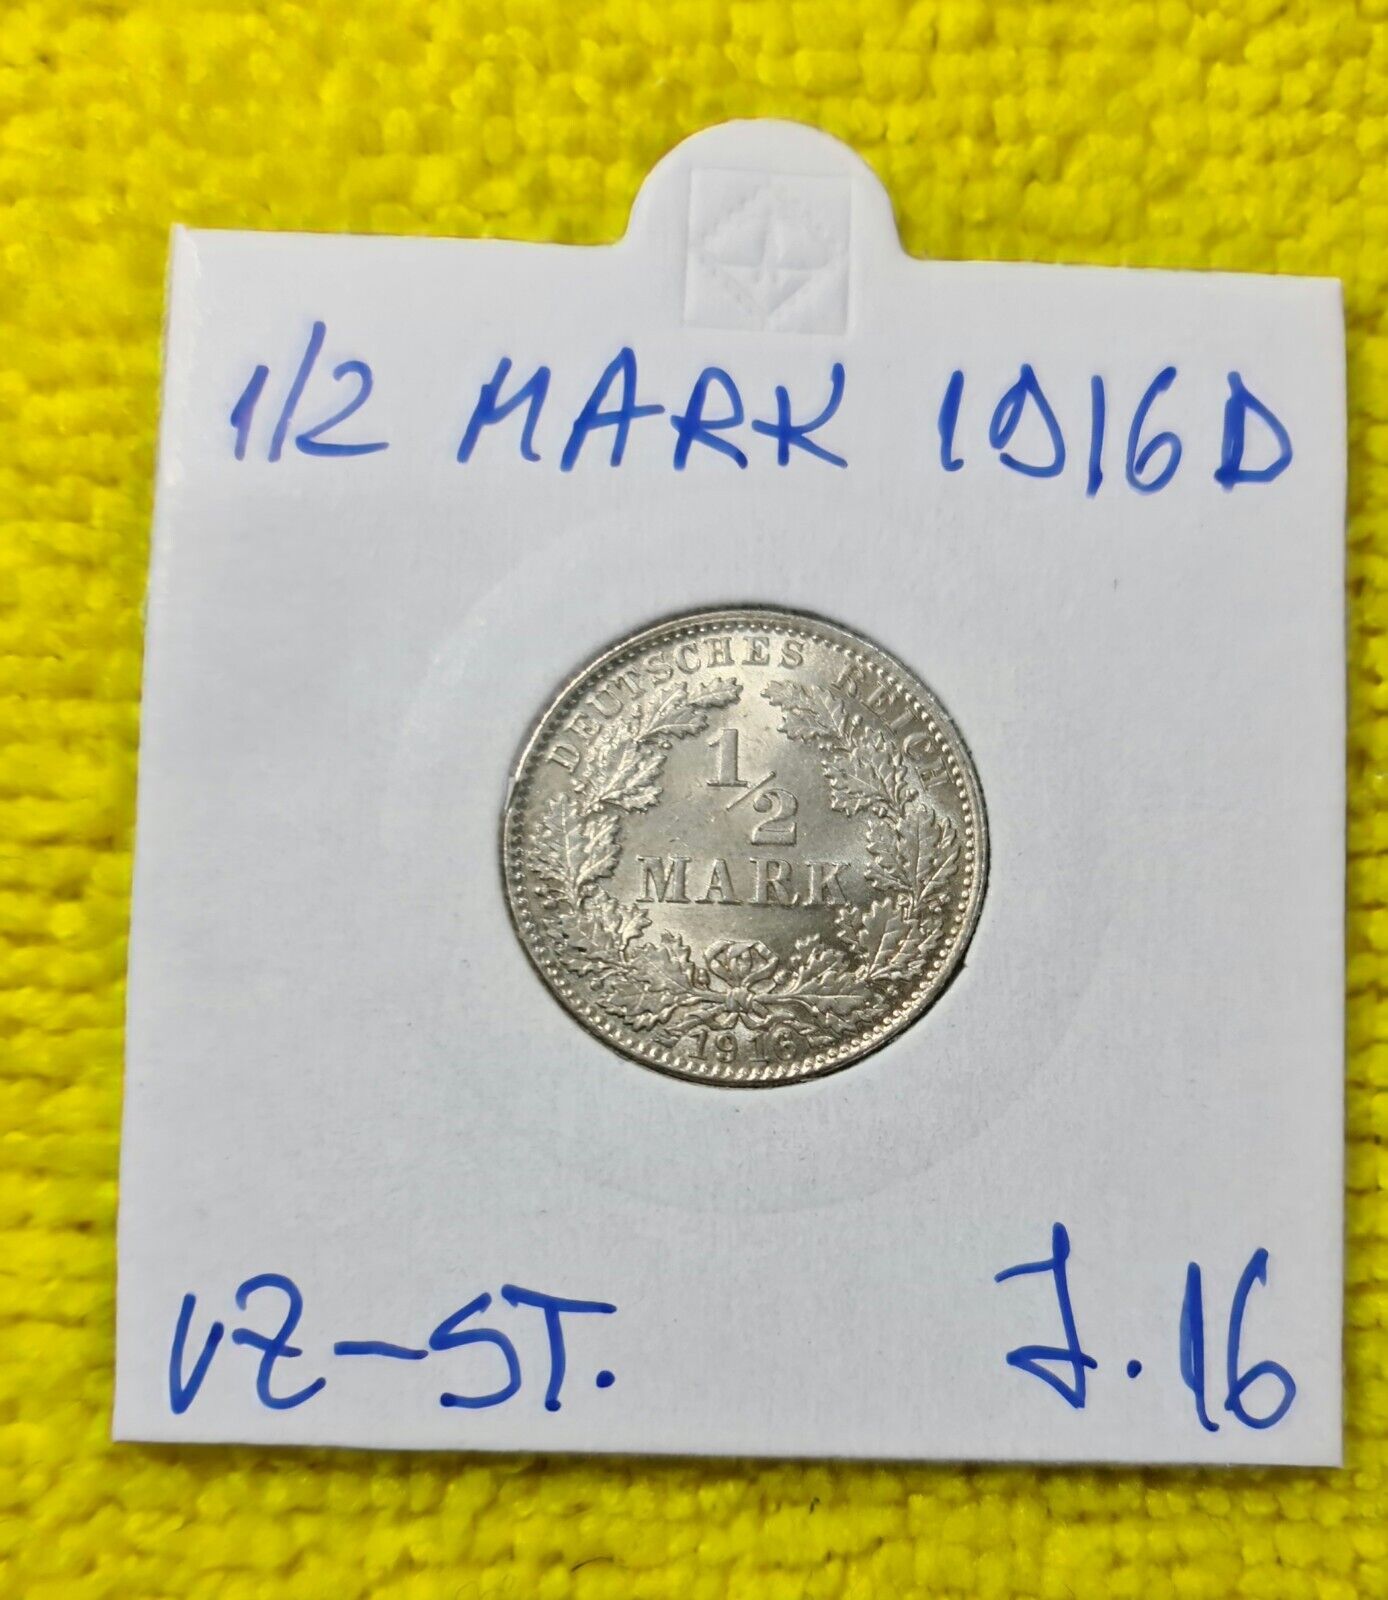 Germany 1/2 Mark 1916 D Silver KM#17 J.16